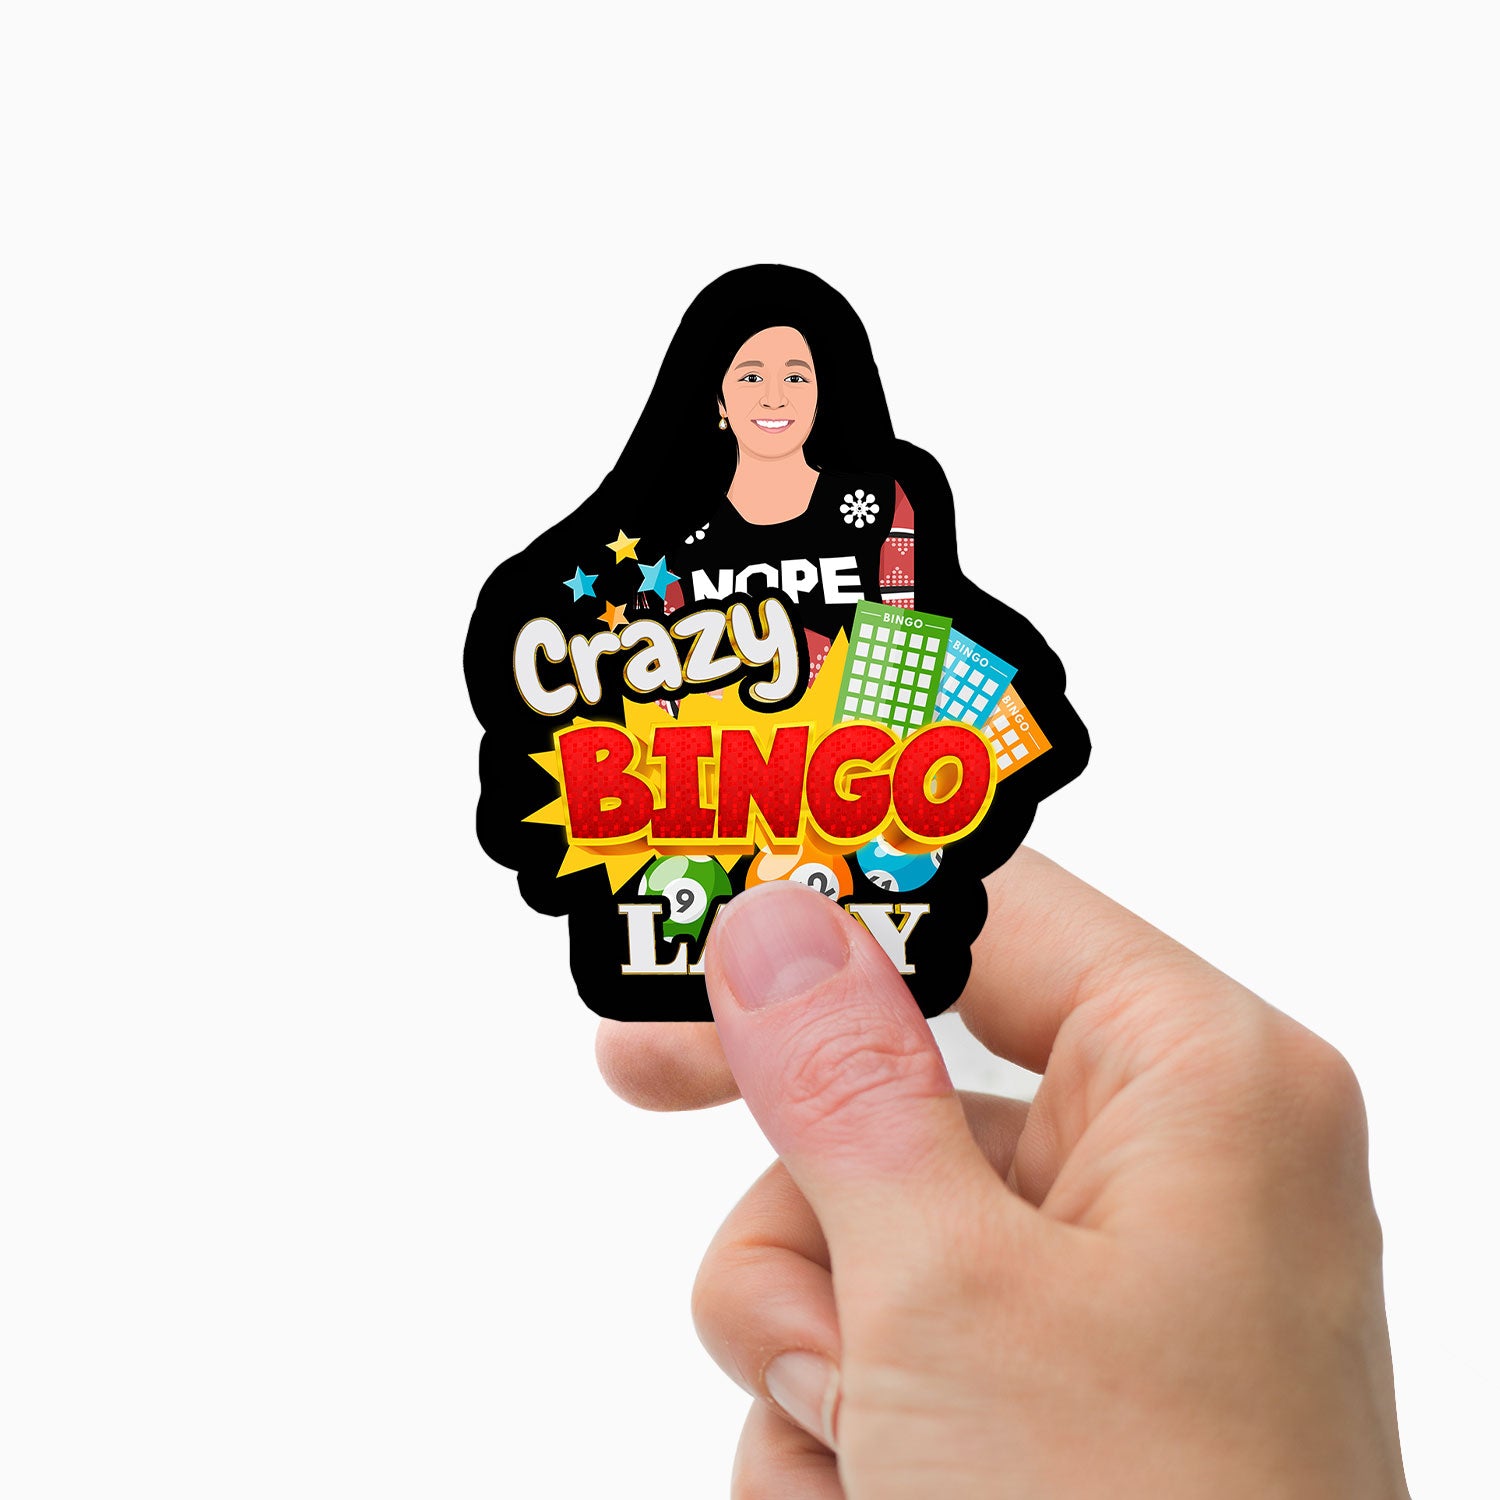 crazy? i was crazy once Sticker for Sale by bingo